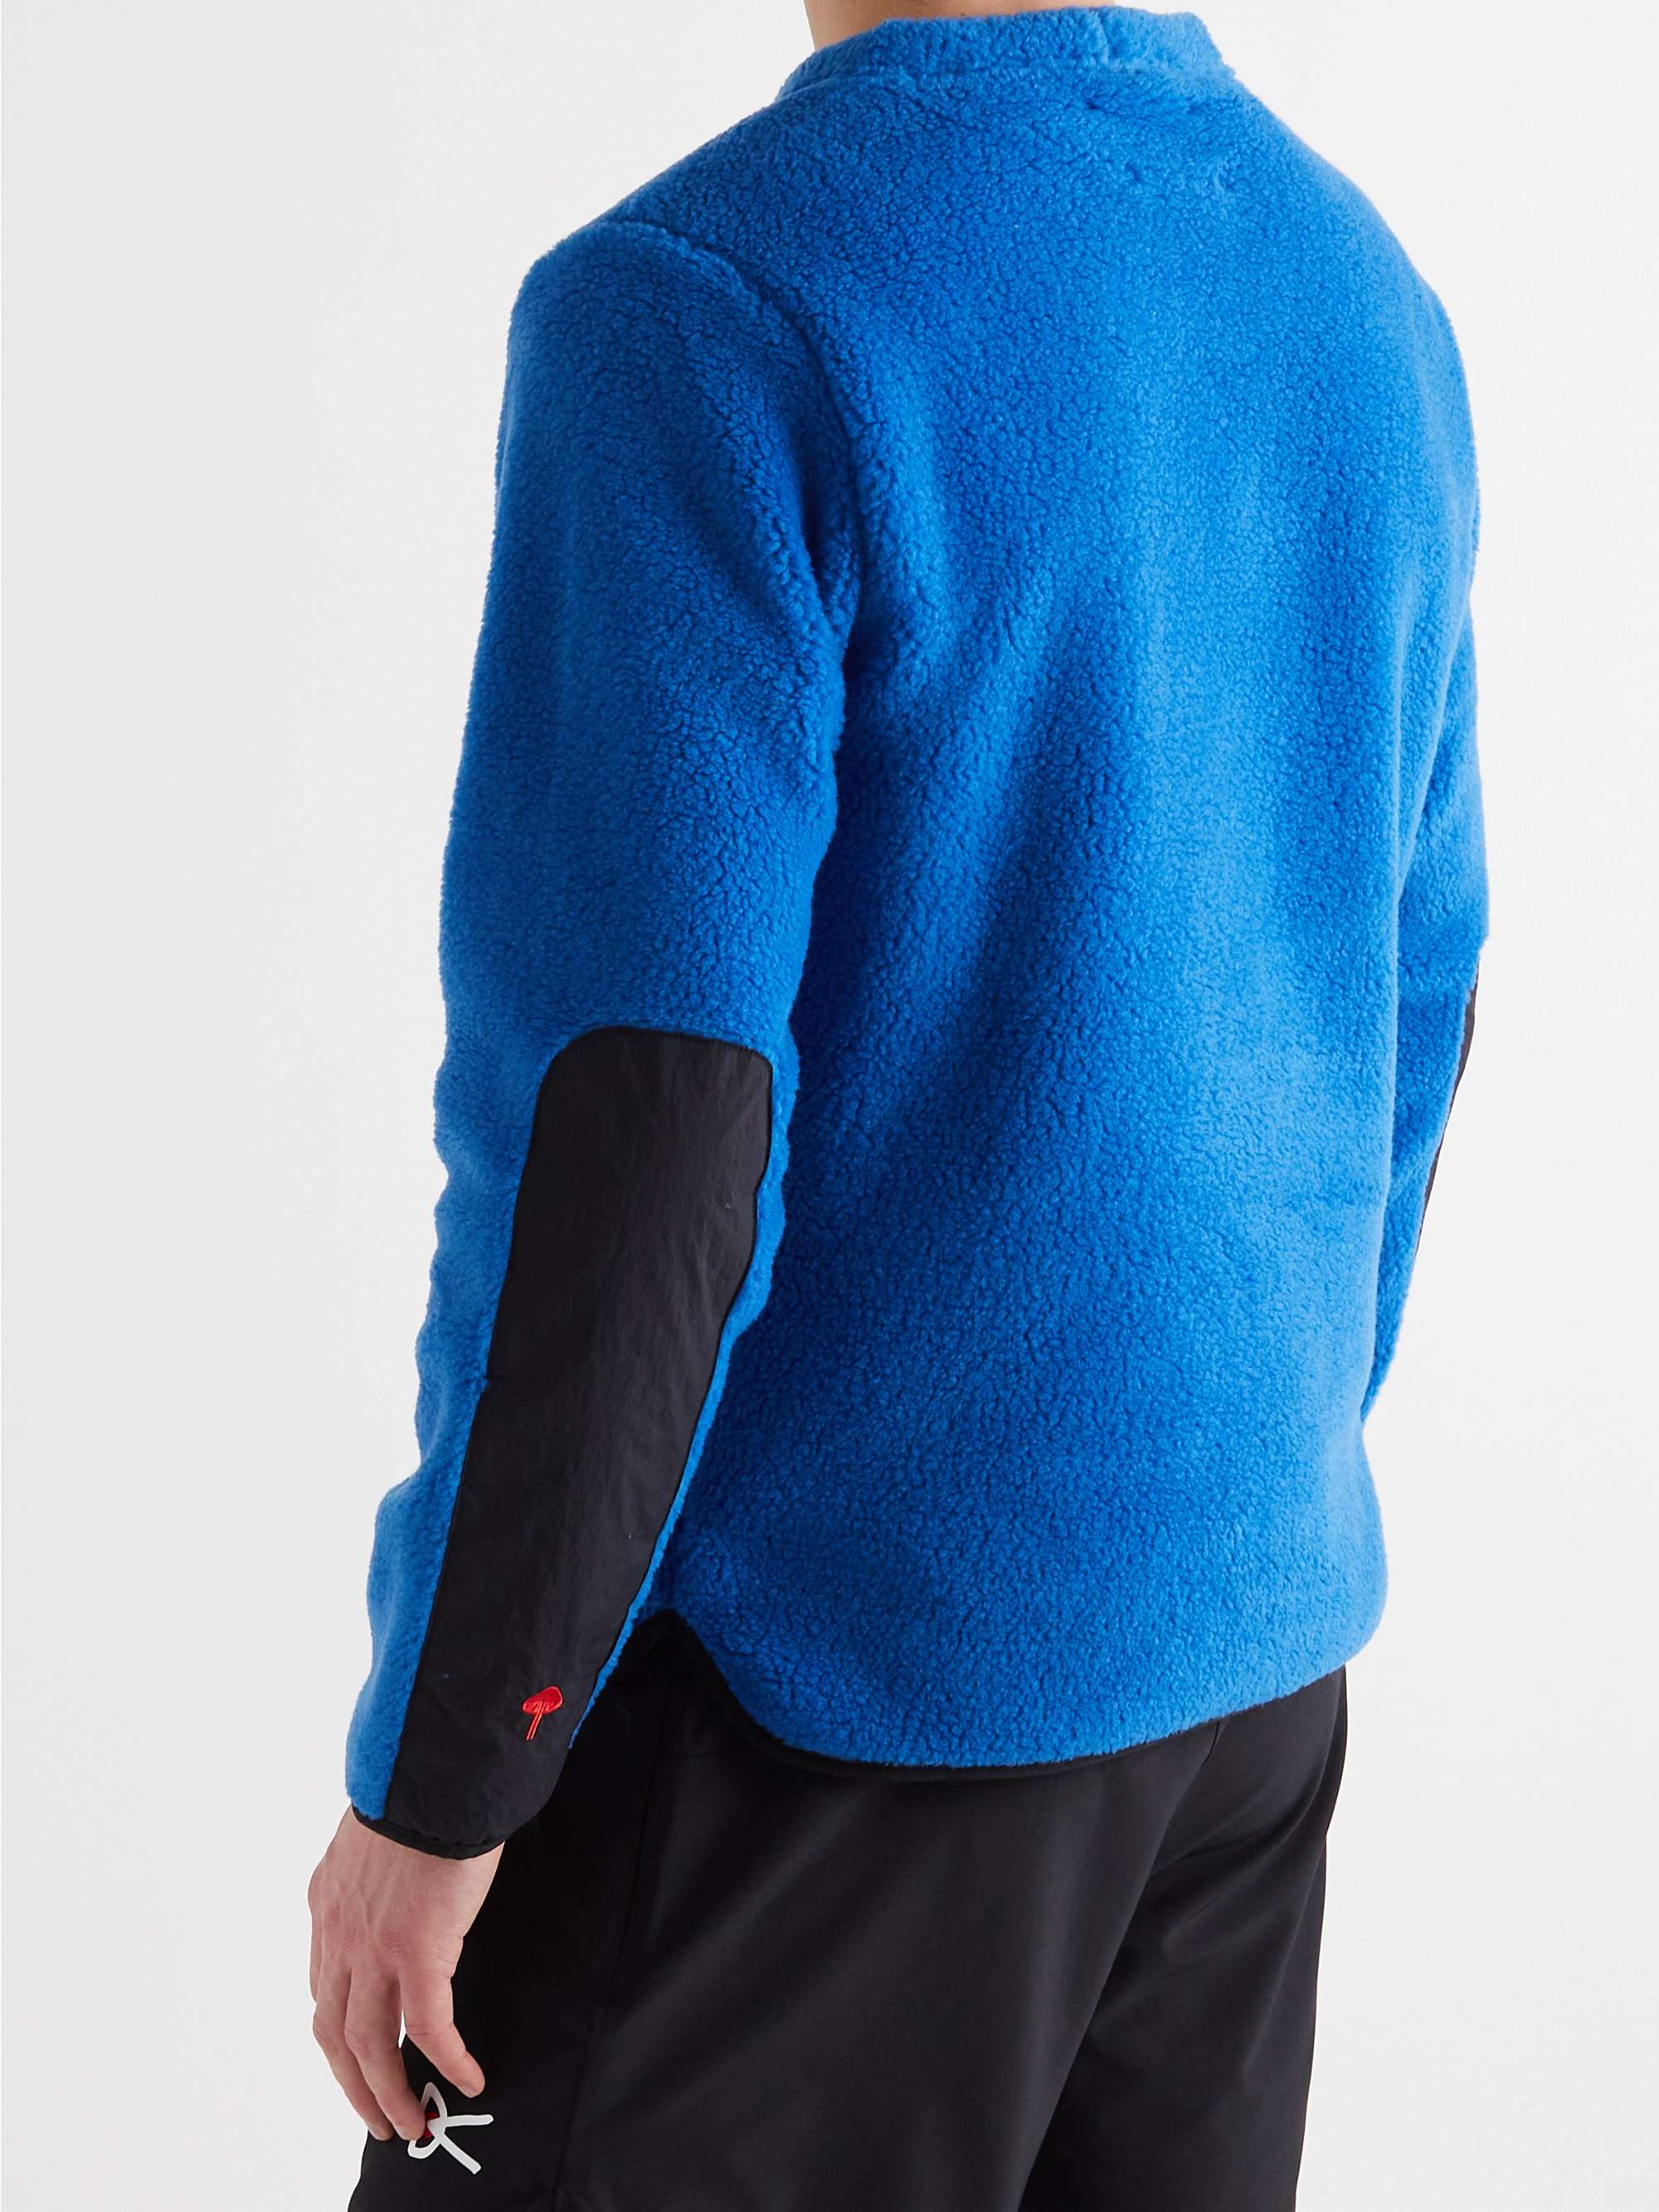 DISTRICT VISION Sola Shell and Mesh-Trimmed Polartec Fleece Sweatshirt